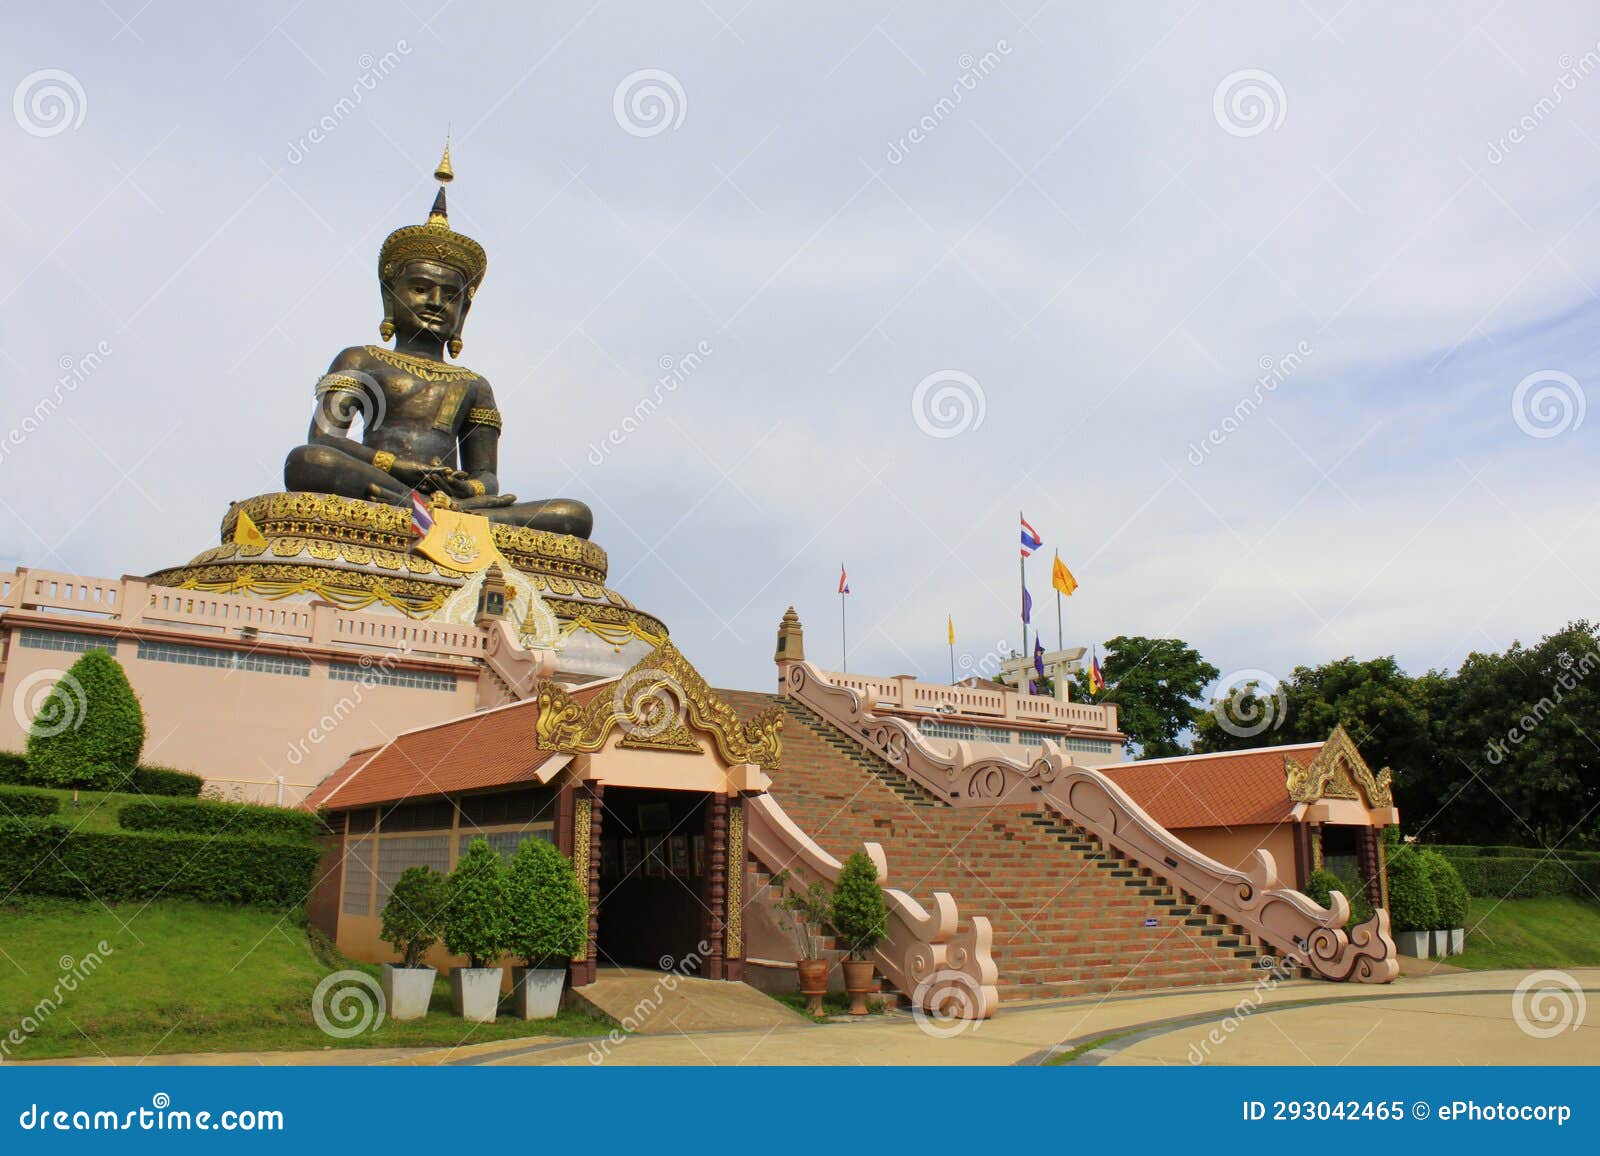 main entrance and steps to the idol of phra buddha maha dhammraja, phetchabun